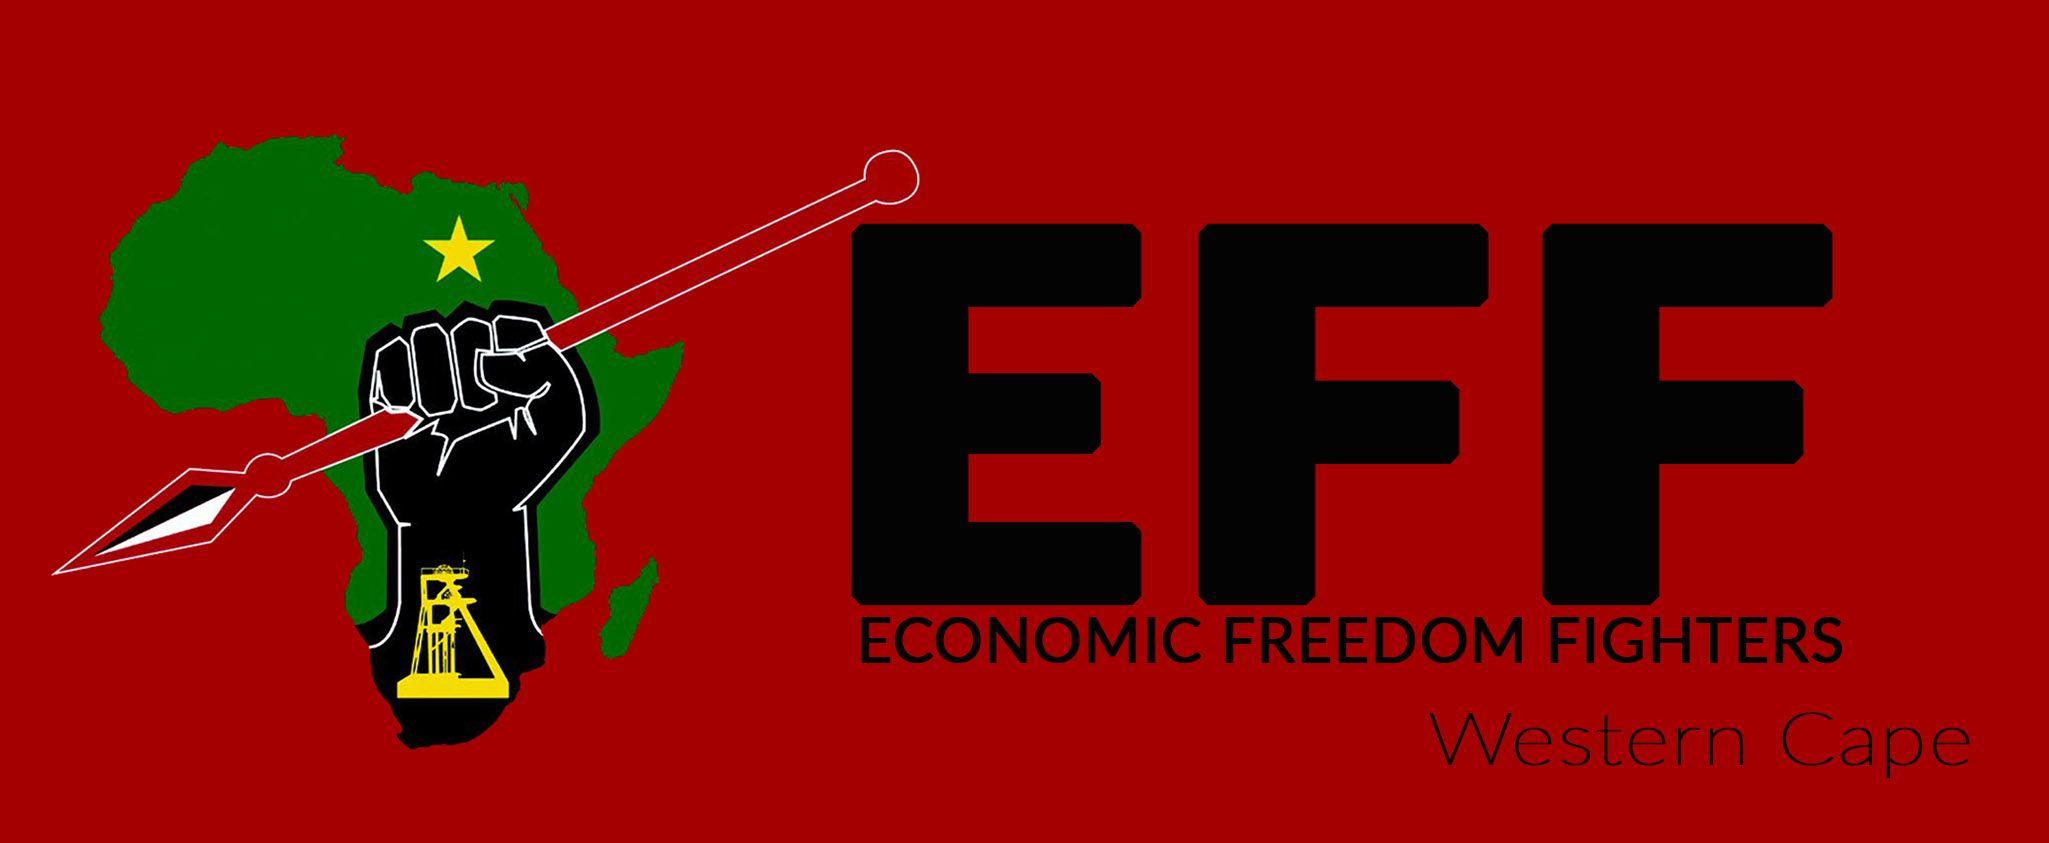 Eff Logo - EFF LOGO PAGE3 | Economic Freedom Fighters